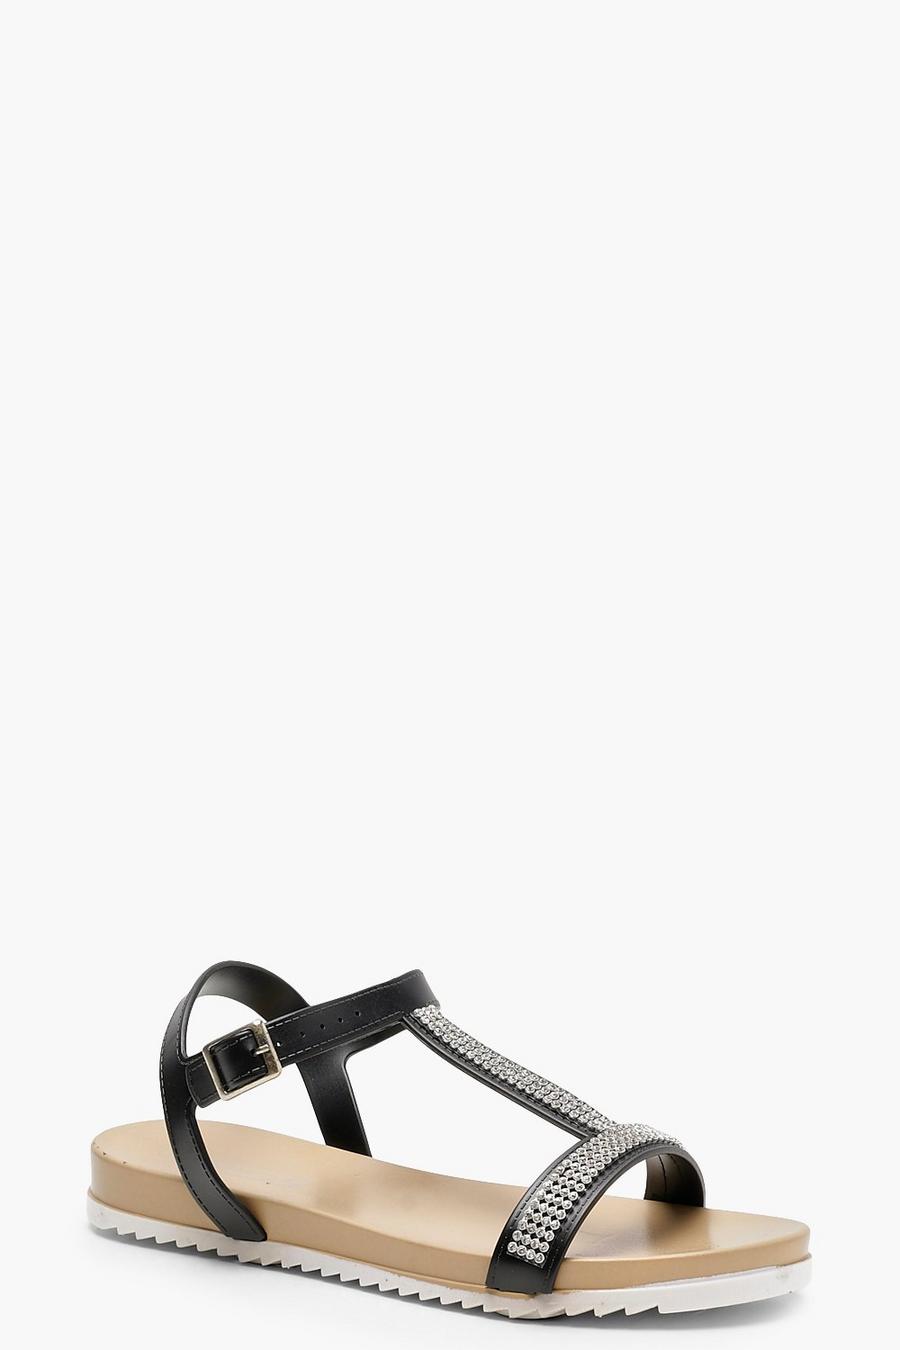 Black Rhinestone T-Bar Sandals image number 1